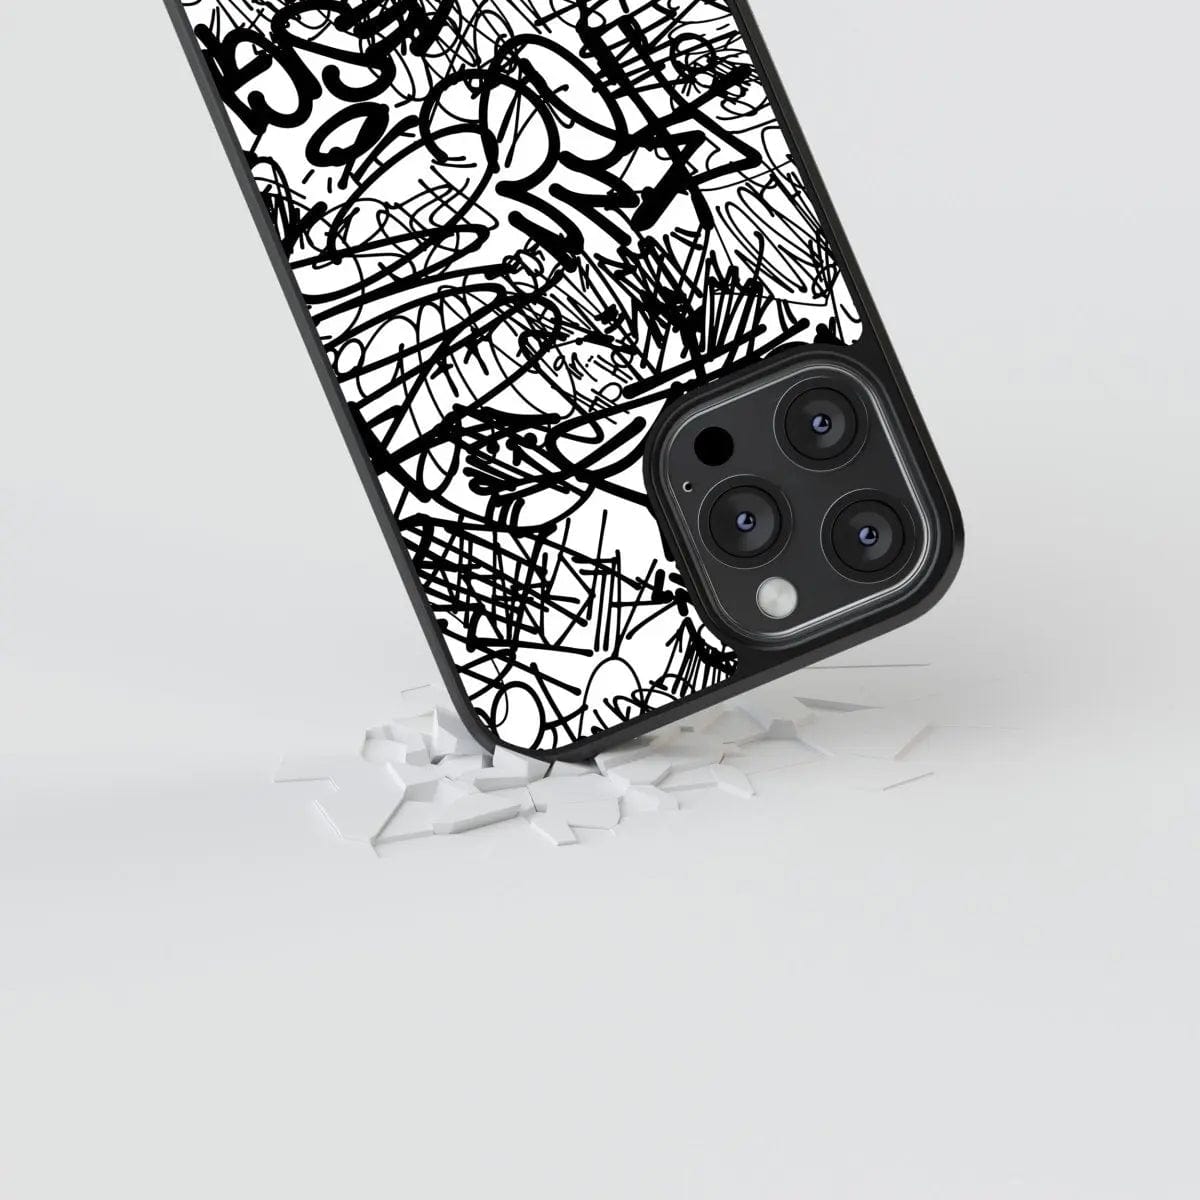 Phone case "Black graffiti on white background" - Artcase